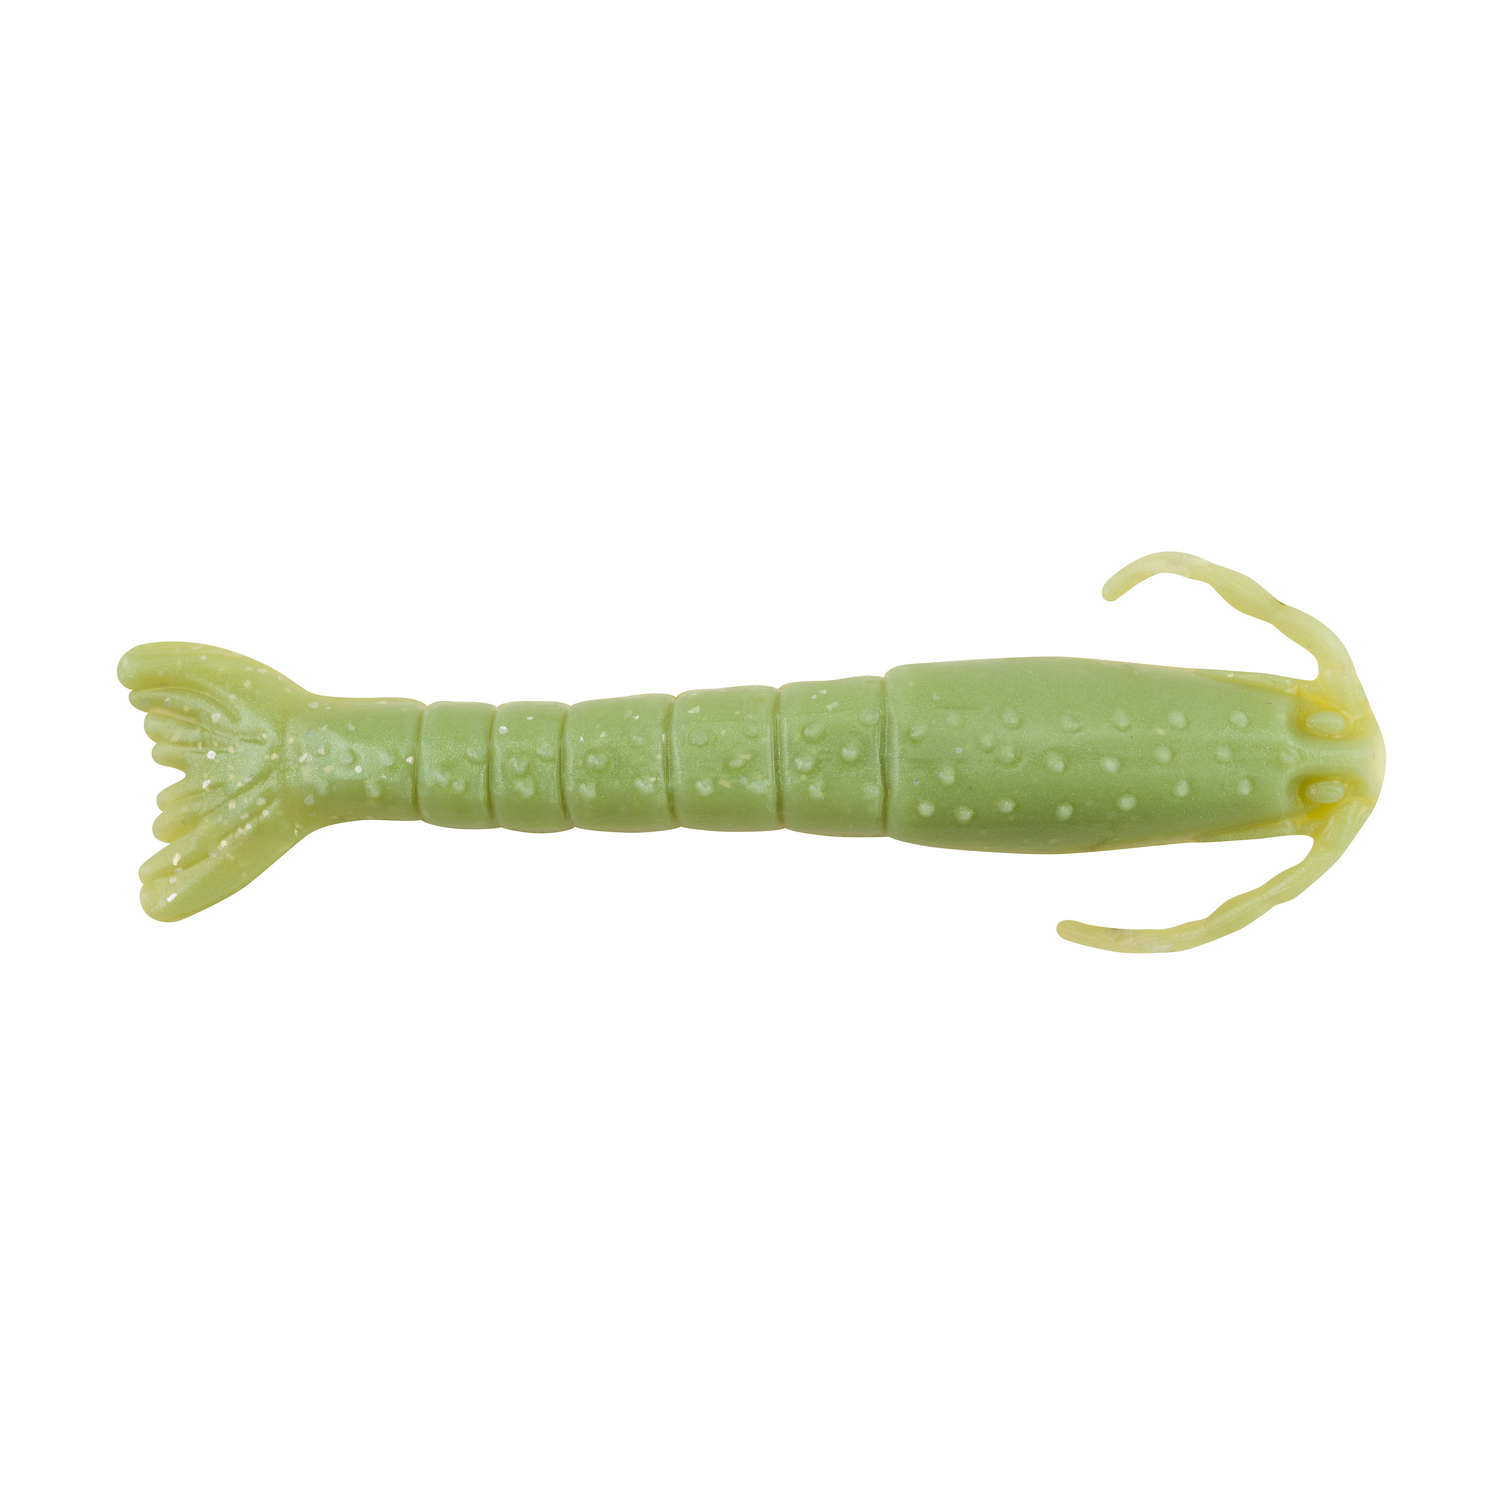 Brand New - Berkley Gulp 2 Shrimp Soft Plastic Fishing Lure - Choose Colour